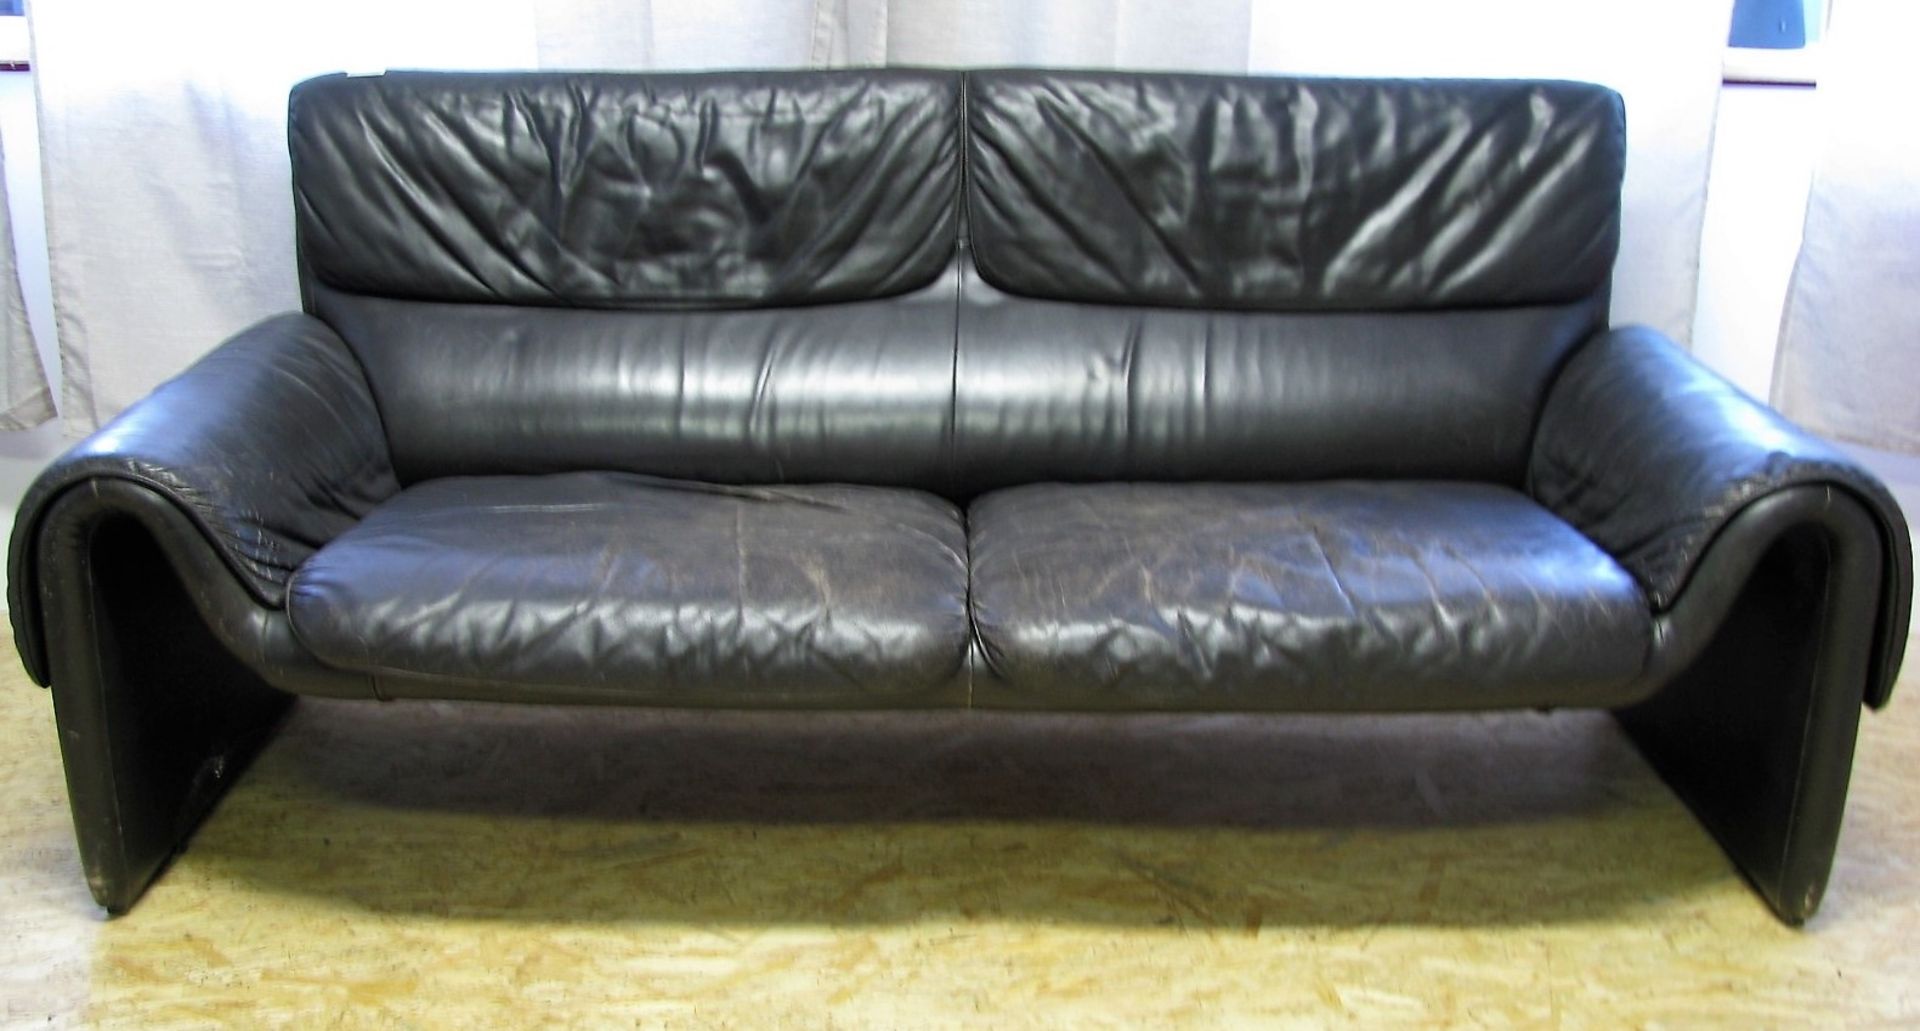 Designer-Sofa, De Sede, Modell DS 2011, Zweisitzer, schwarzes Leder, 81 x 190 x 80 cm.- - -19.00 %